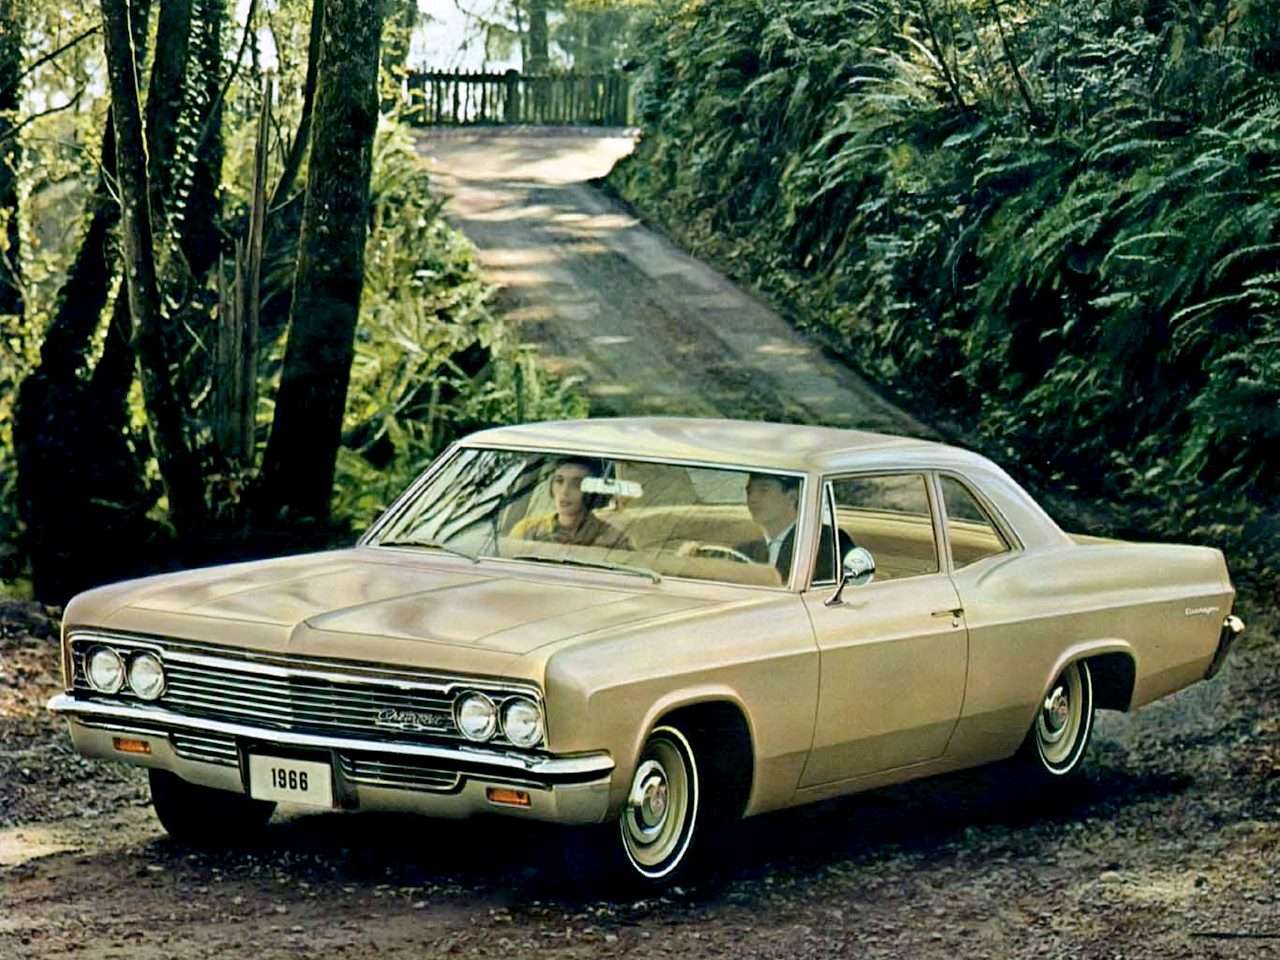 1966 Chevrolet Biscayne Sedan 2-drzwiowy puzzle online